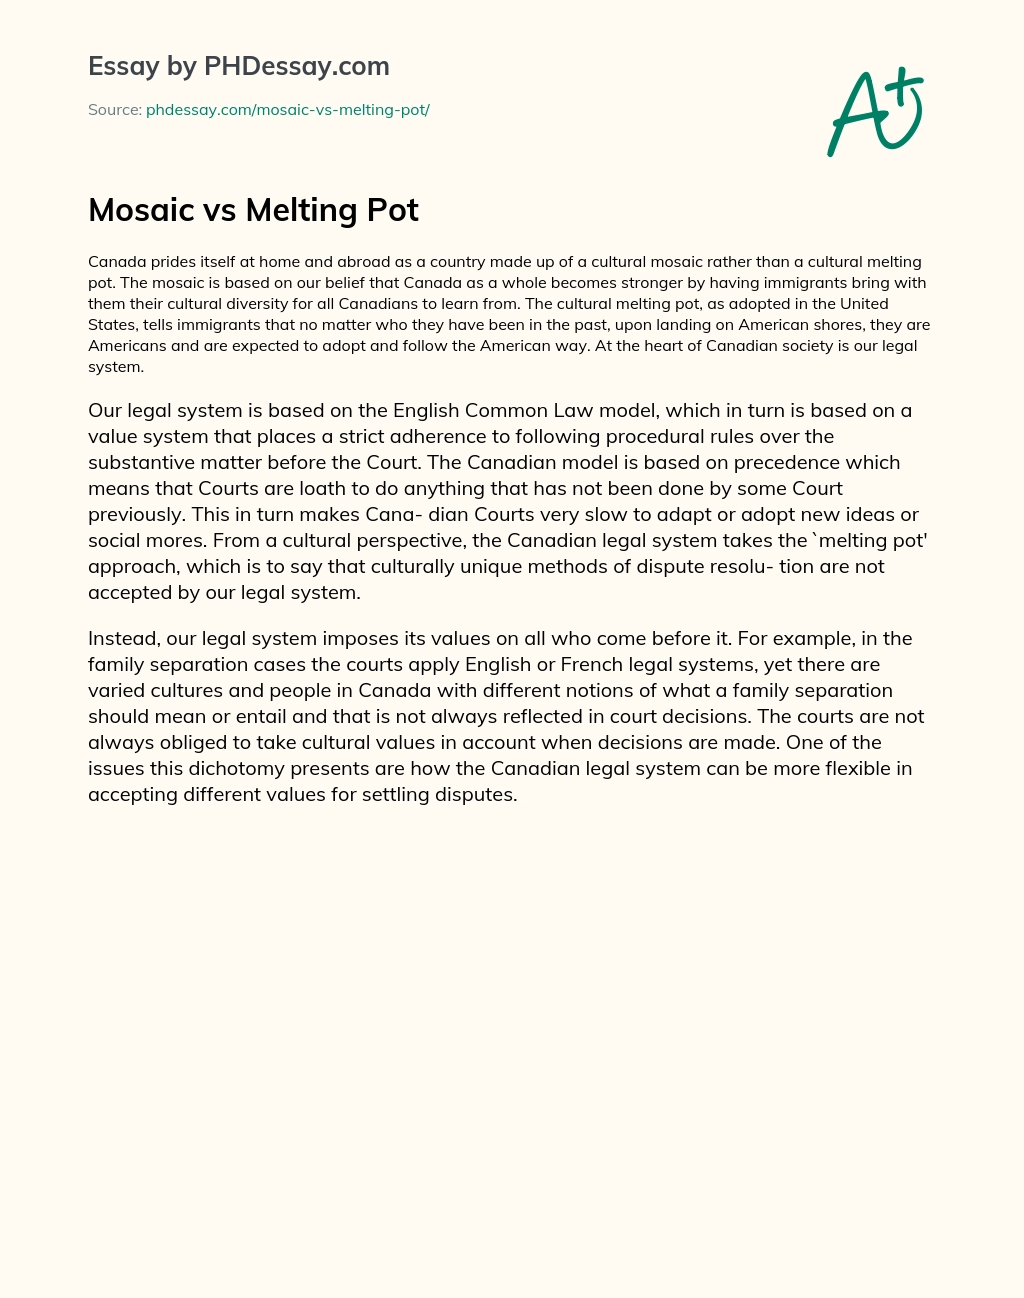 Mosaic vs Melting Pot essay